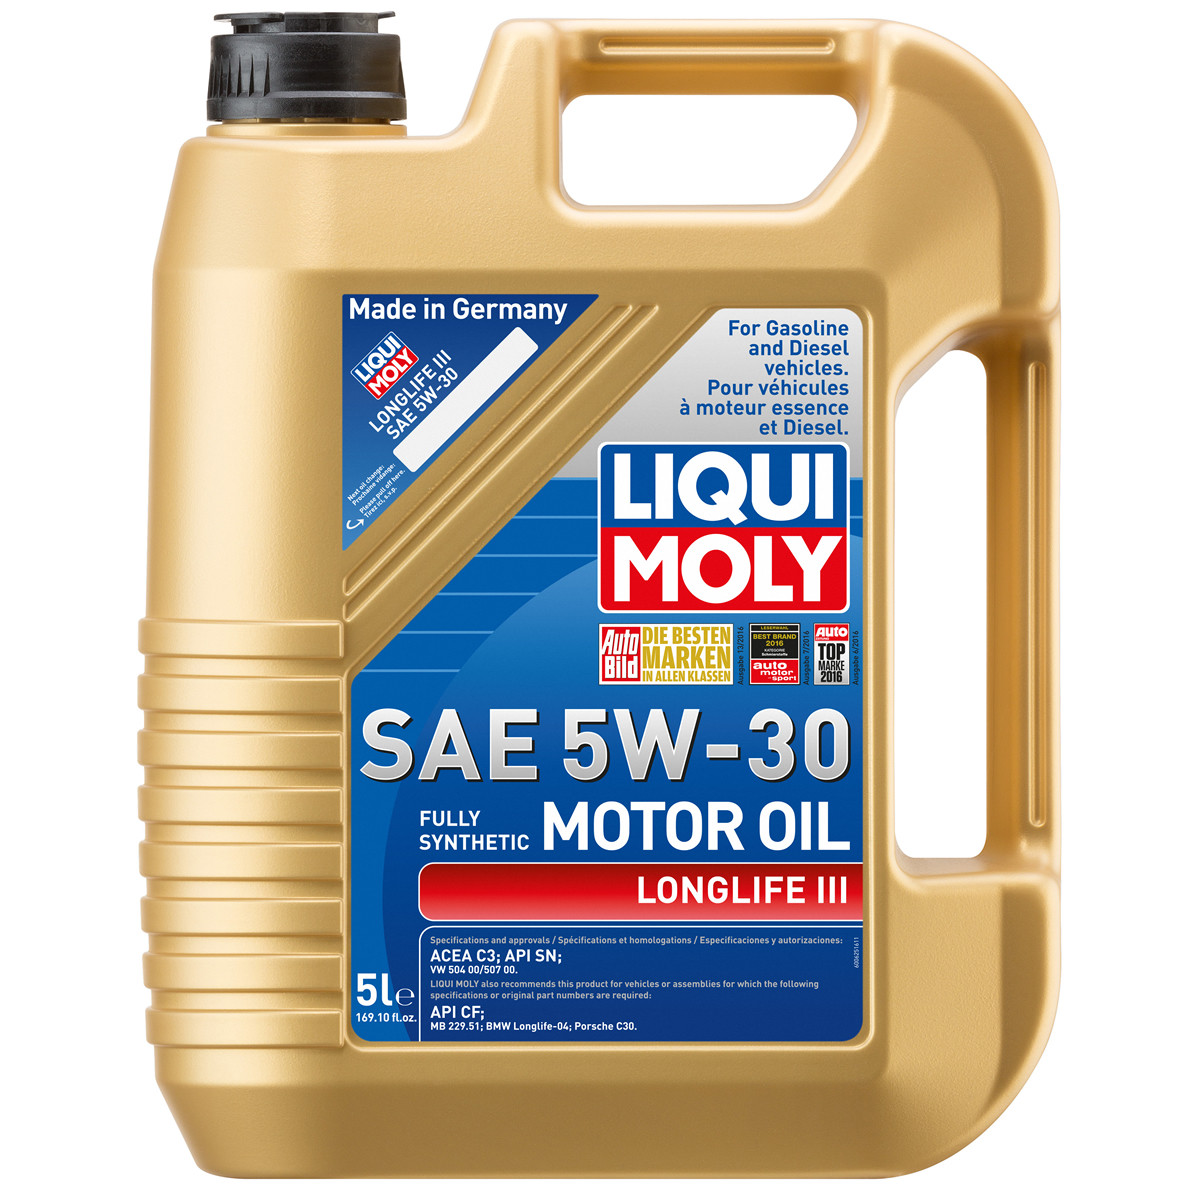 LIQUI MOLY Longlife III 5W-30, 5 L, Synthesetechnologie Motoröl